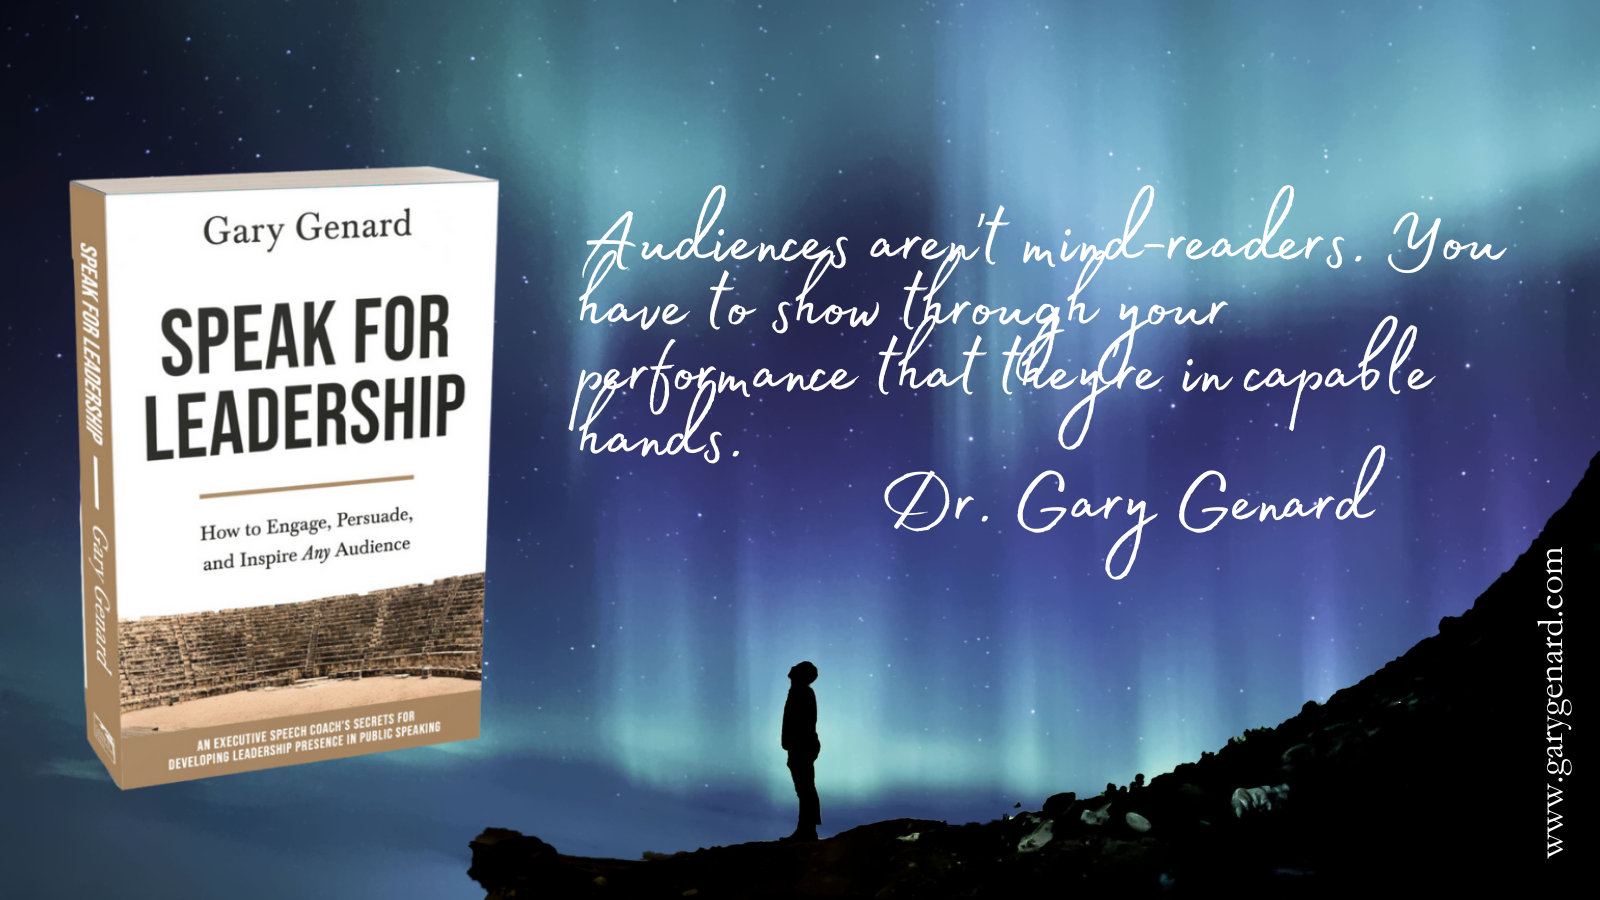 Dr. Gary Genard's book on speaking as a leader, Speak for Leadership.